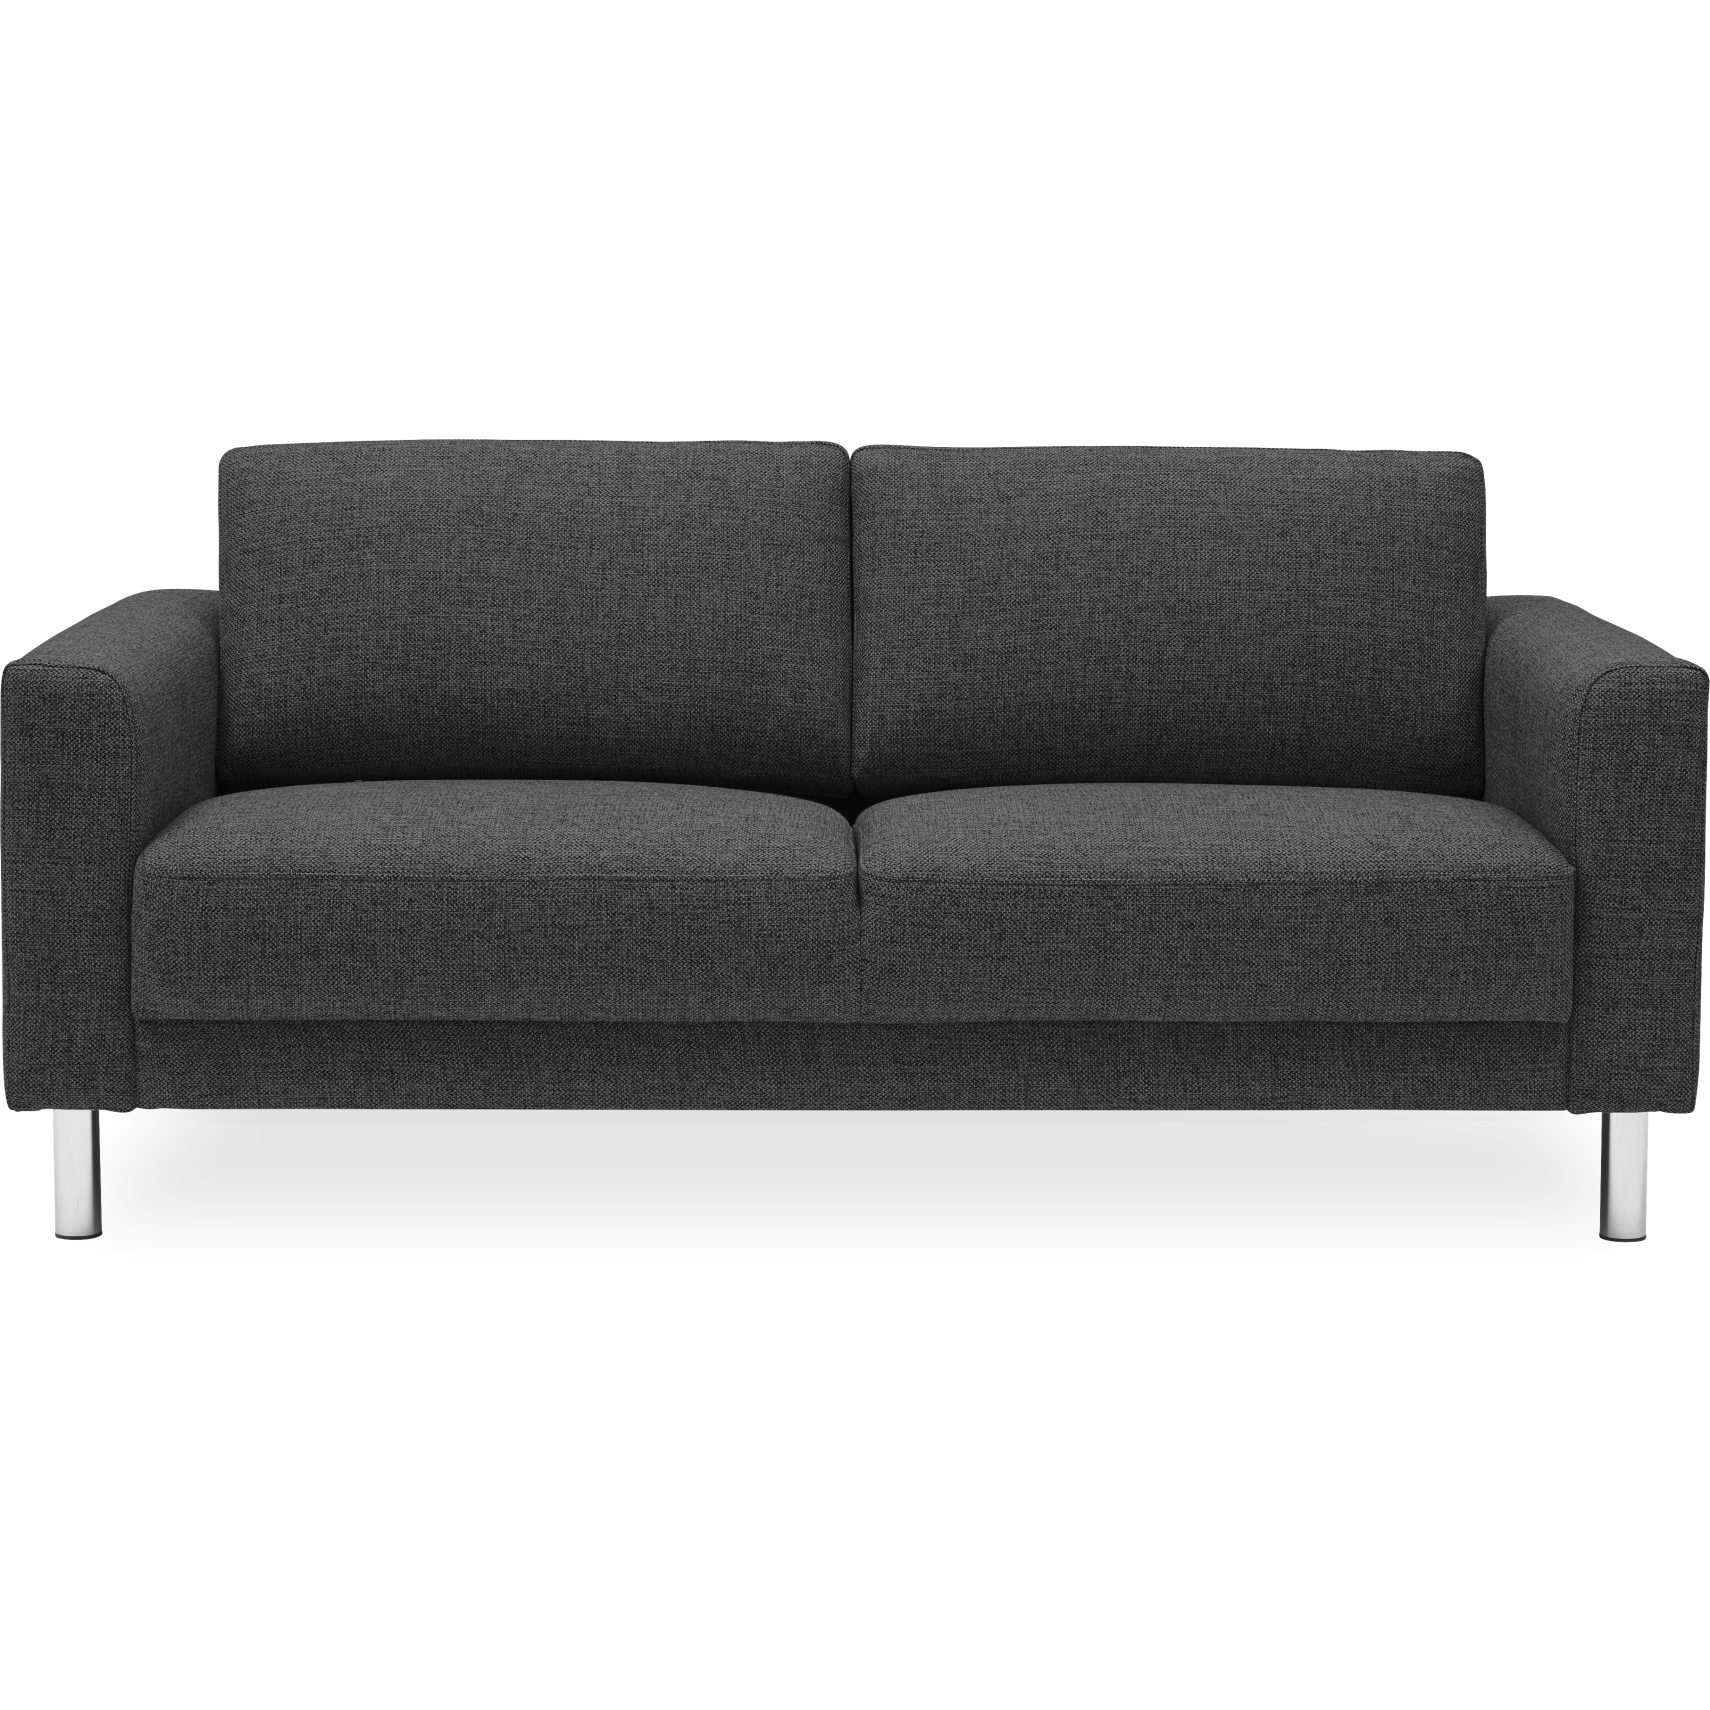 Cleveland 2 pers. Sofa - Riviera 51 Antracit stof, ben i krom og sæde i polyetherskum, ryg i polyetherskum